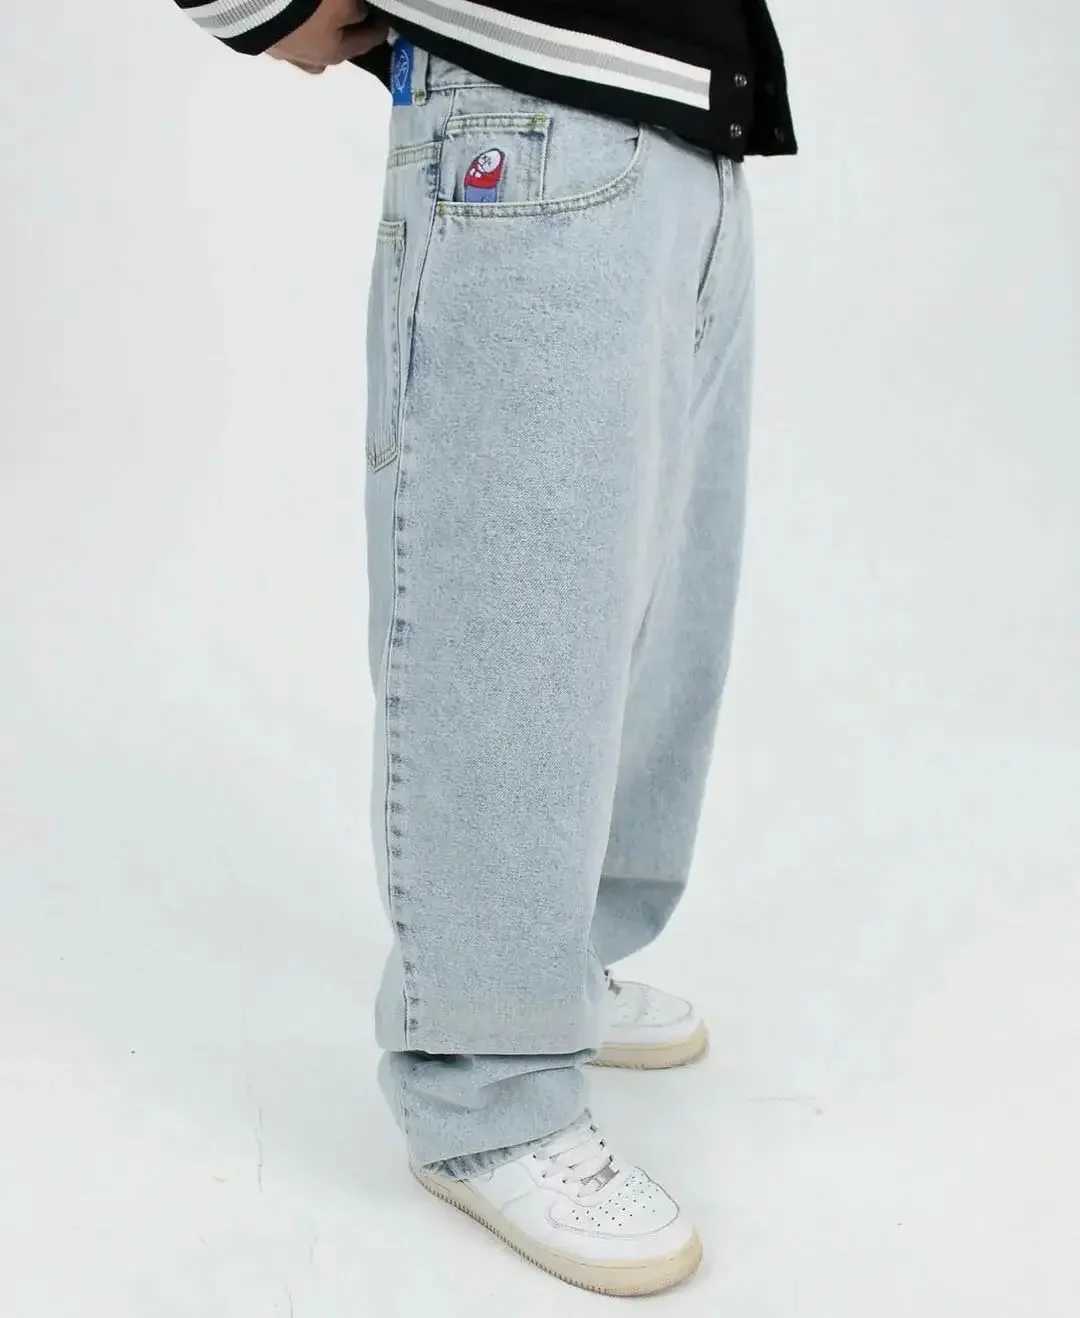 Men's Jeans Polar Big Boys Jeans Y2K Hip Hop Cartoon Embroidered Retro Blue Pocket Jeans Mens Gothic High Waist Wide Leg TrouserL2404